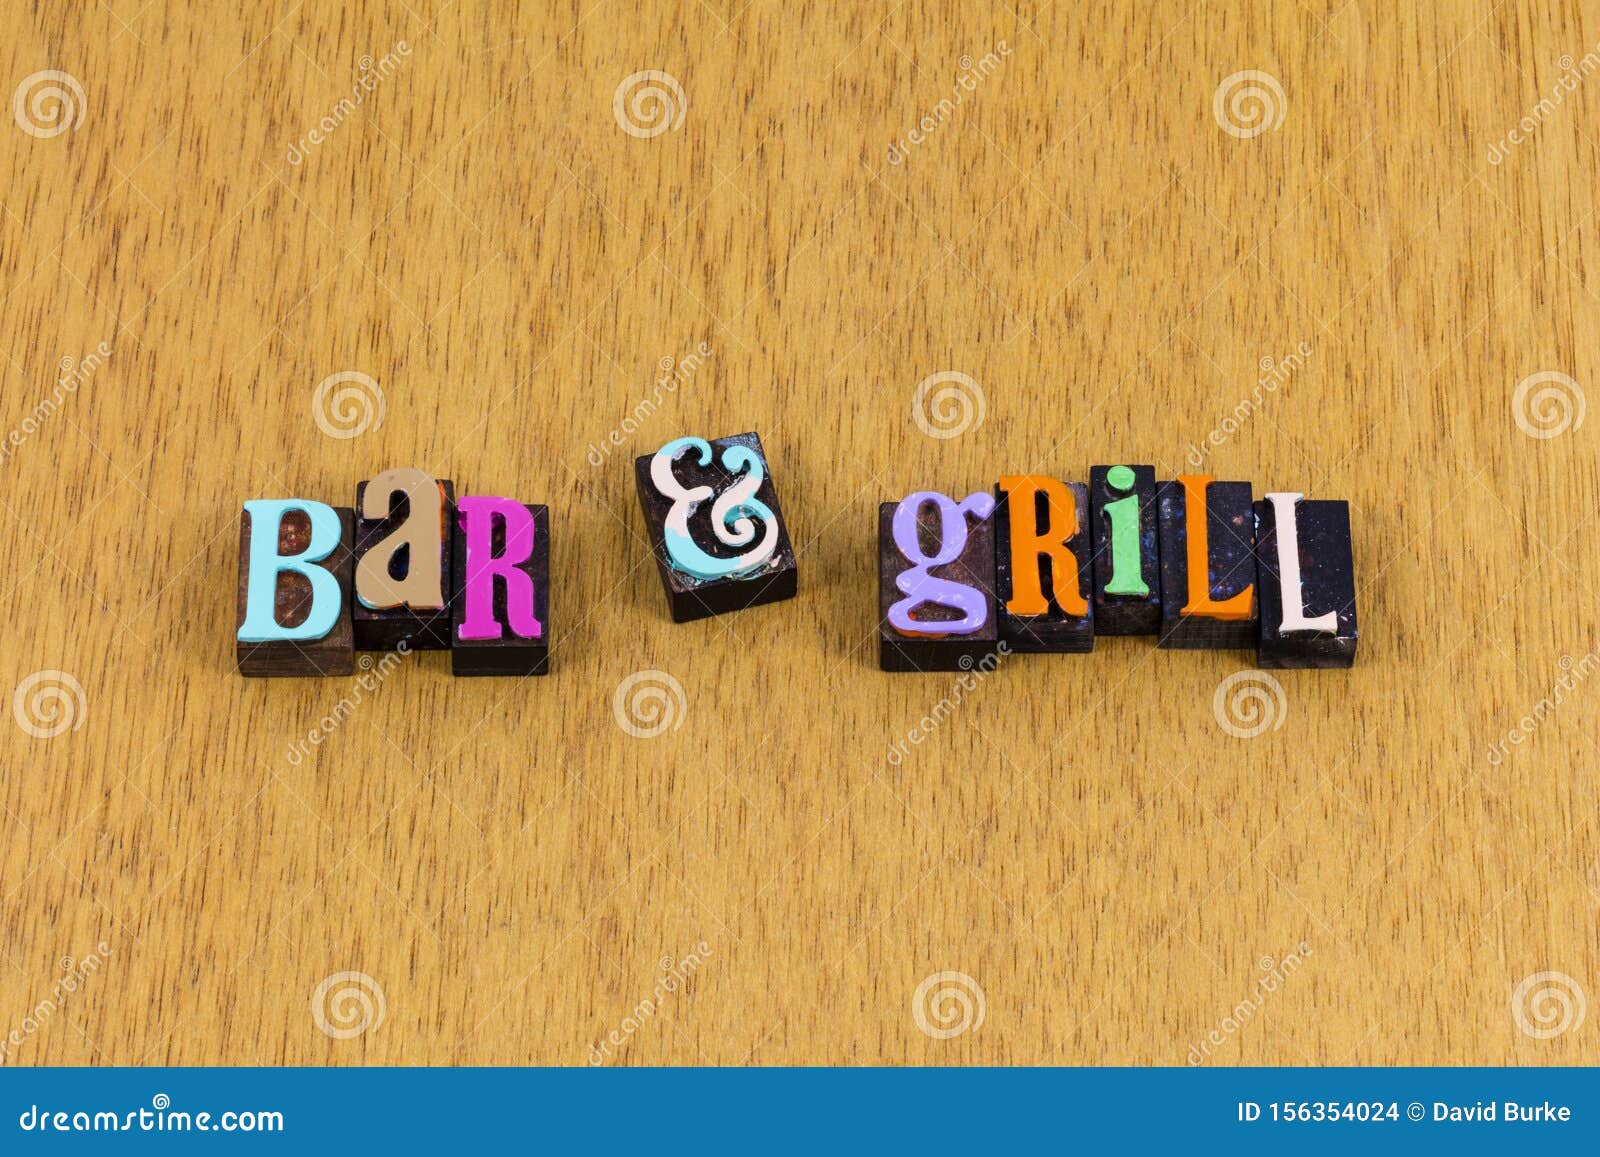 bar grill sign beer booze fun bbq letterpress phrase